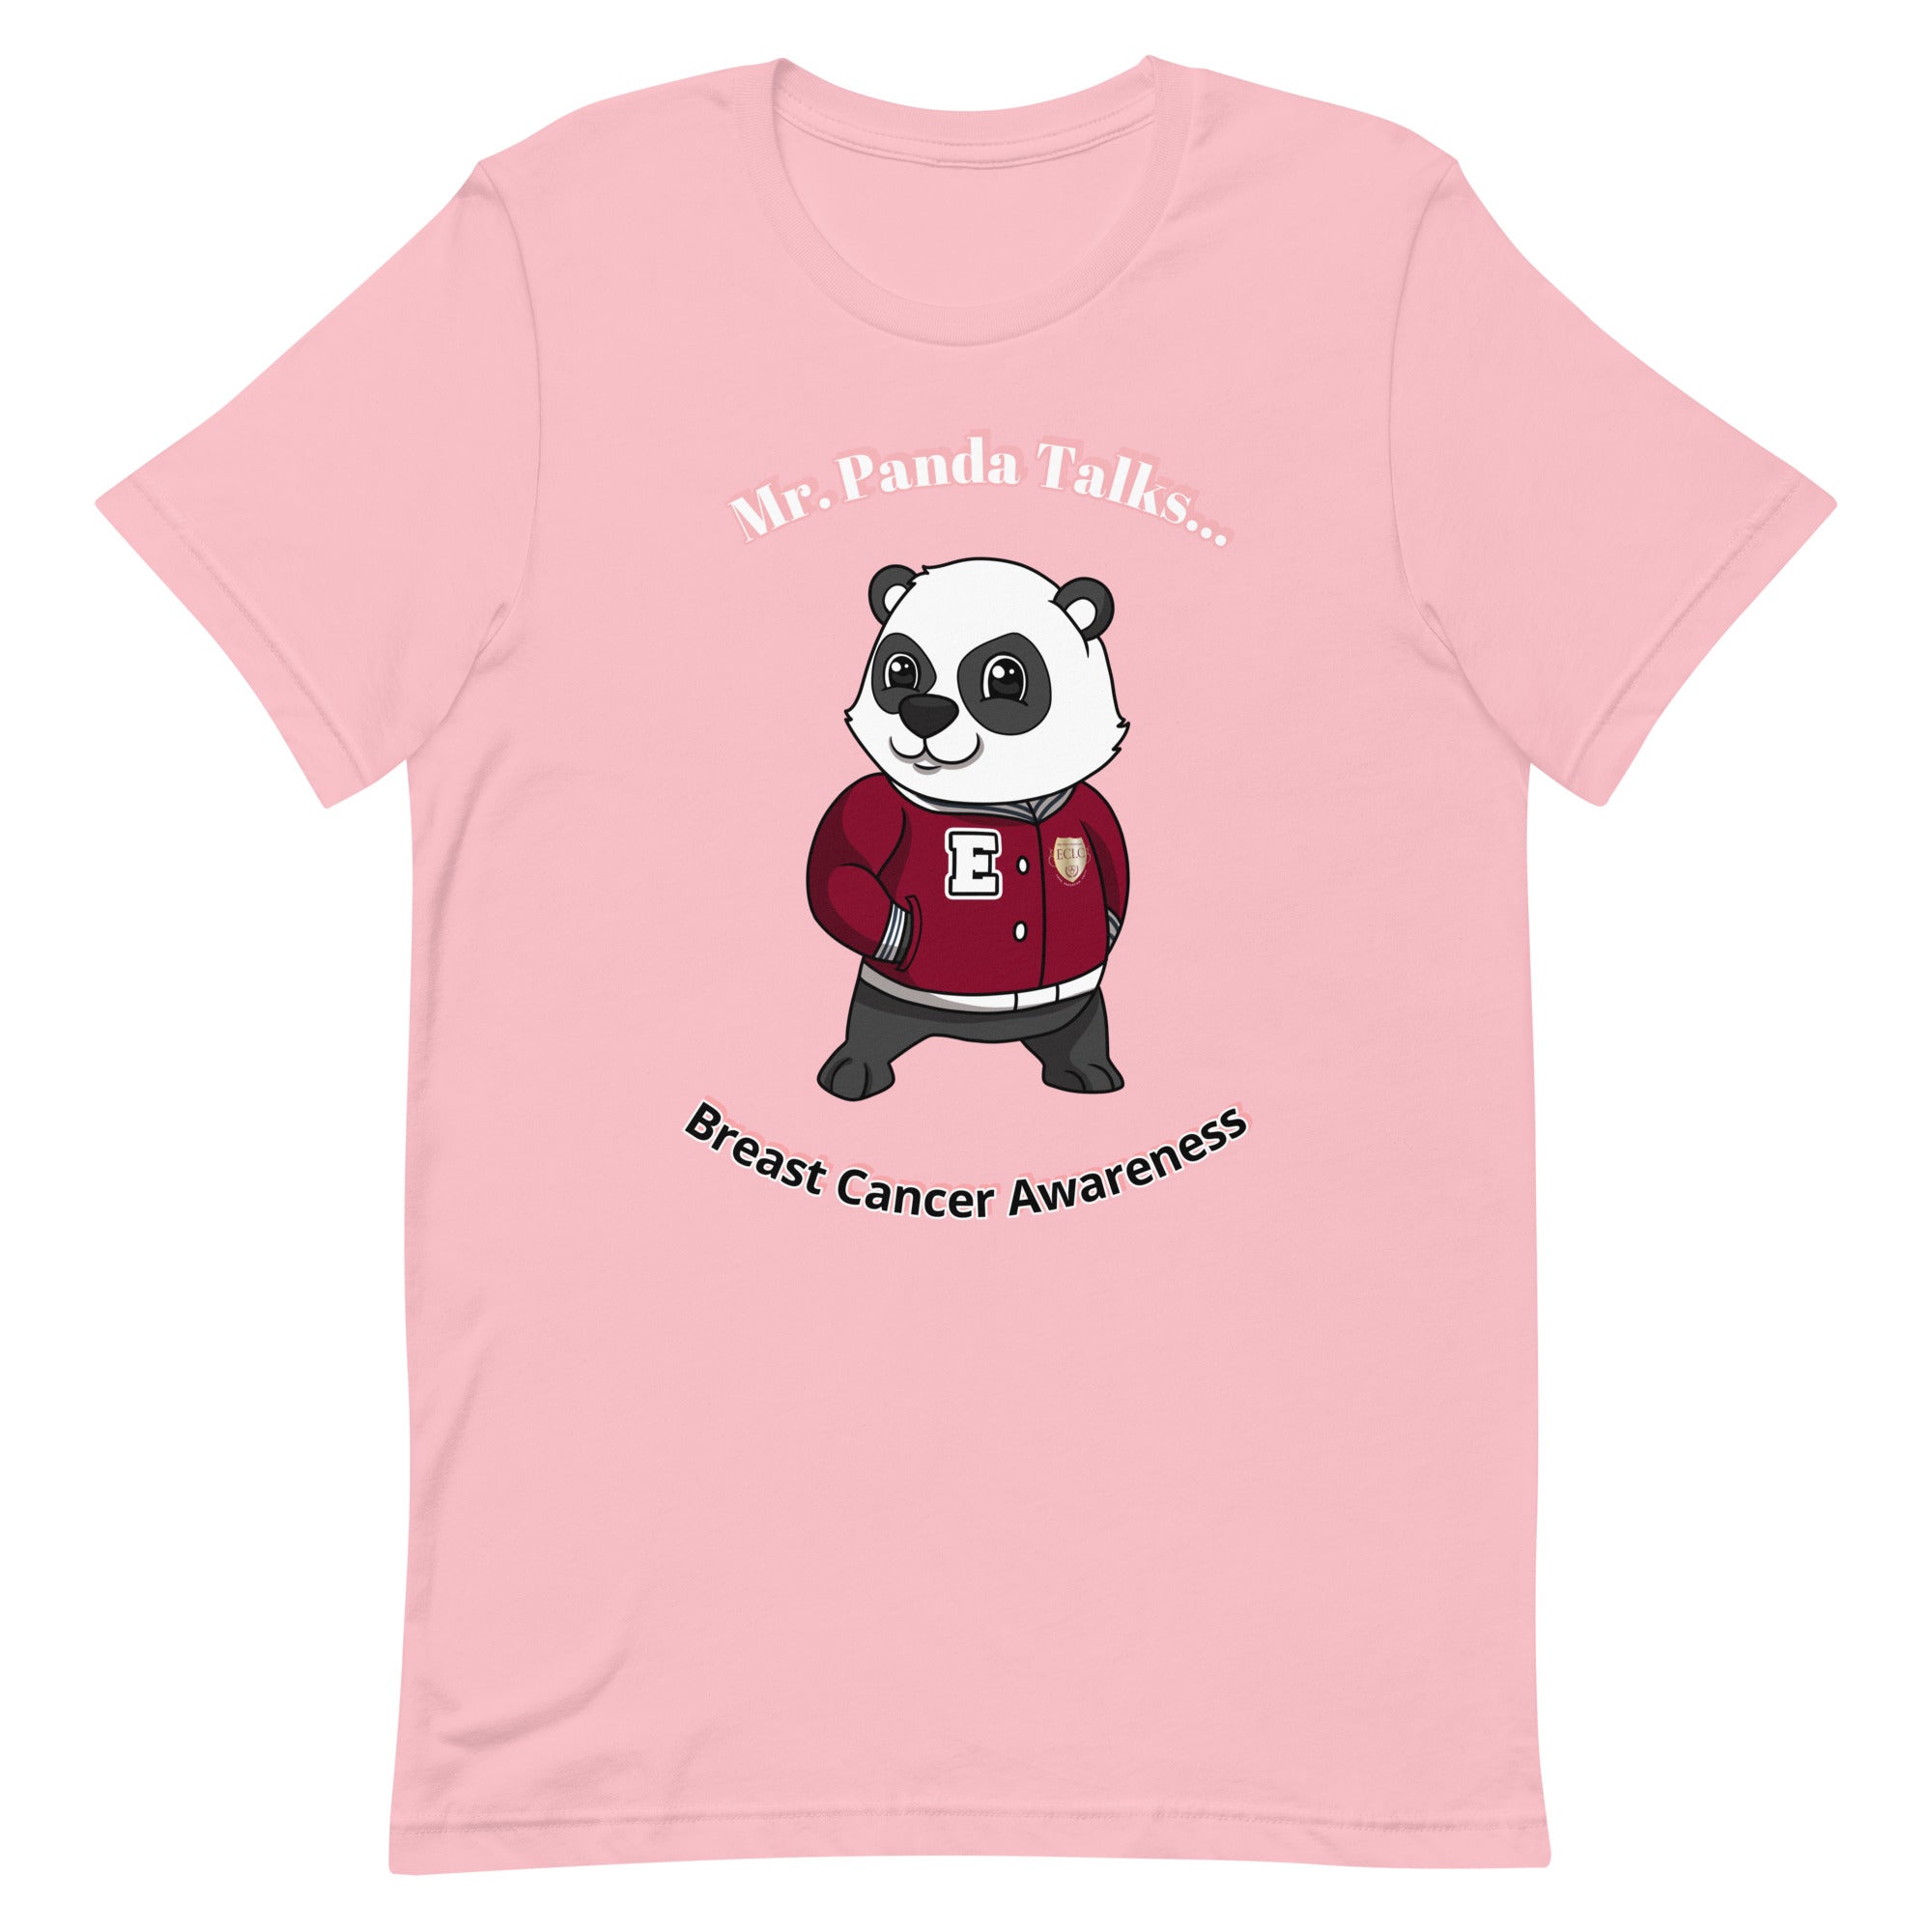 Mr. Panda Cancer Awareness Shirt (Adults - Unisex)